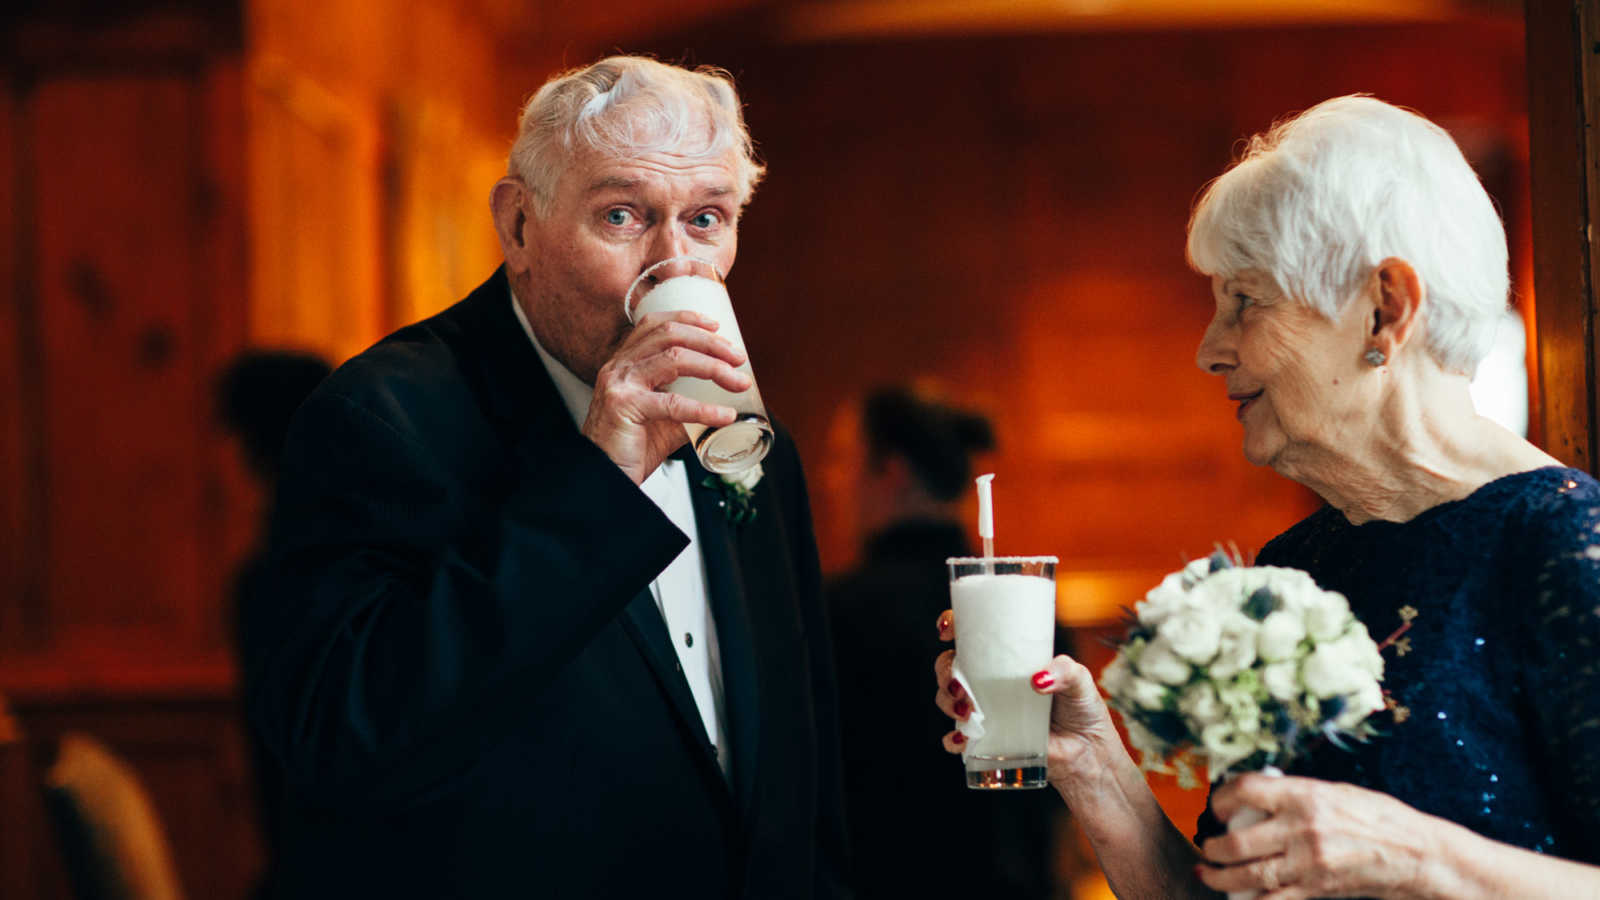 83 year old groom drinks frozen margarita at wedding reception